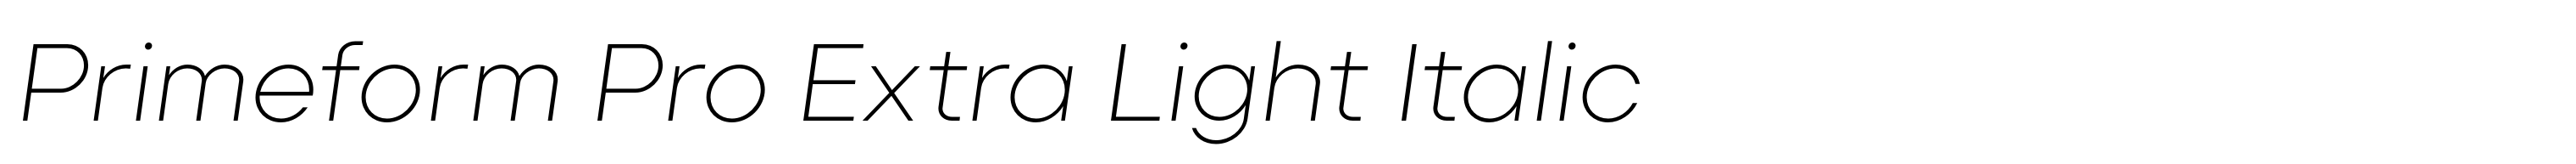 Primeform Pro Extra Light Italic